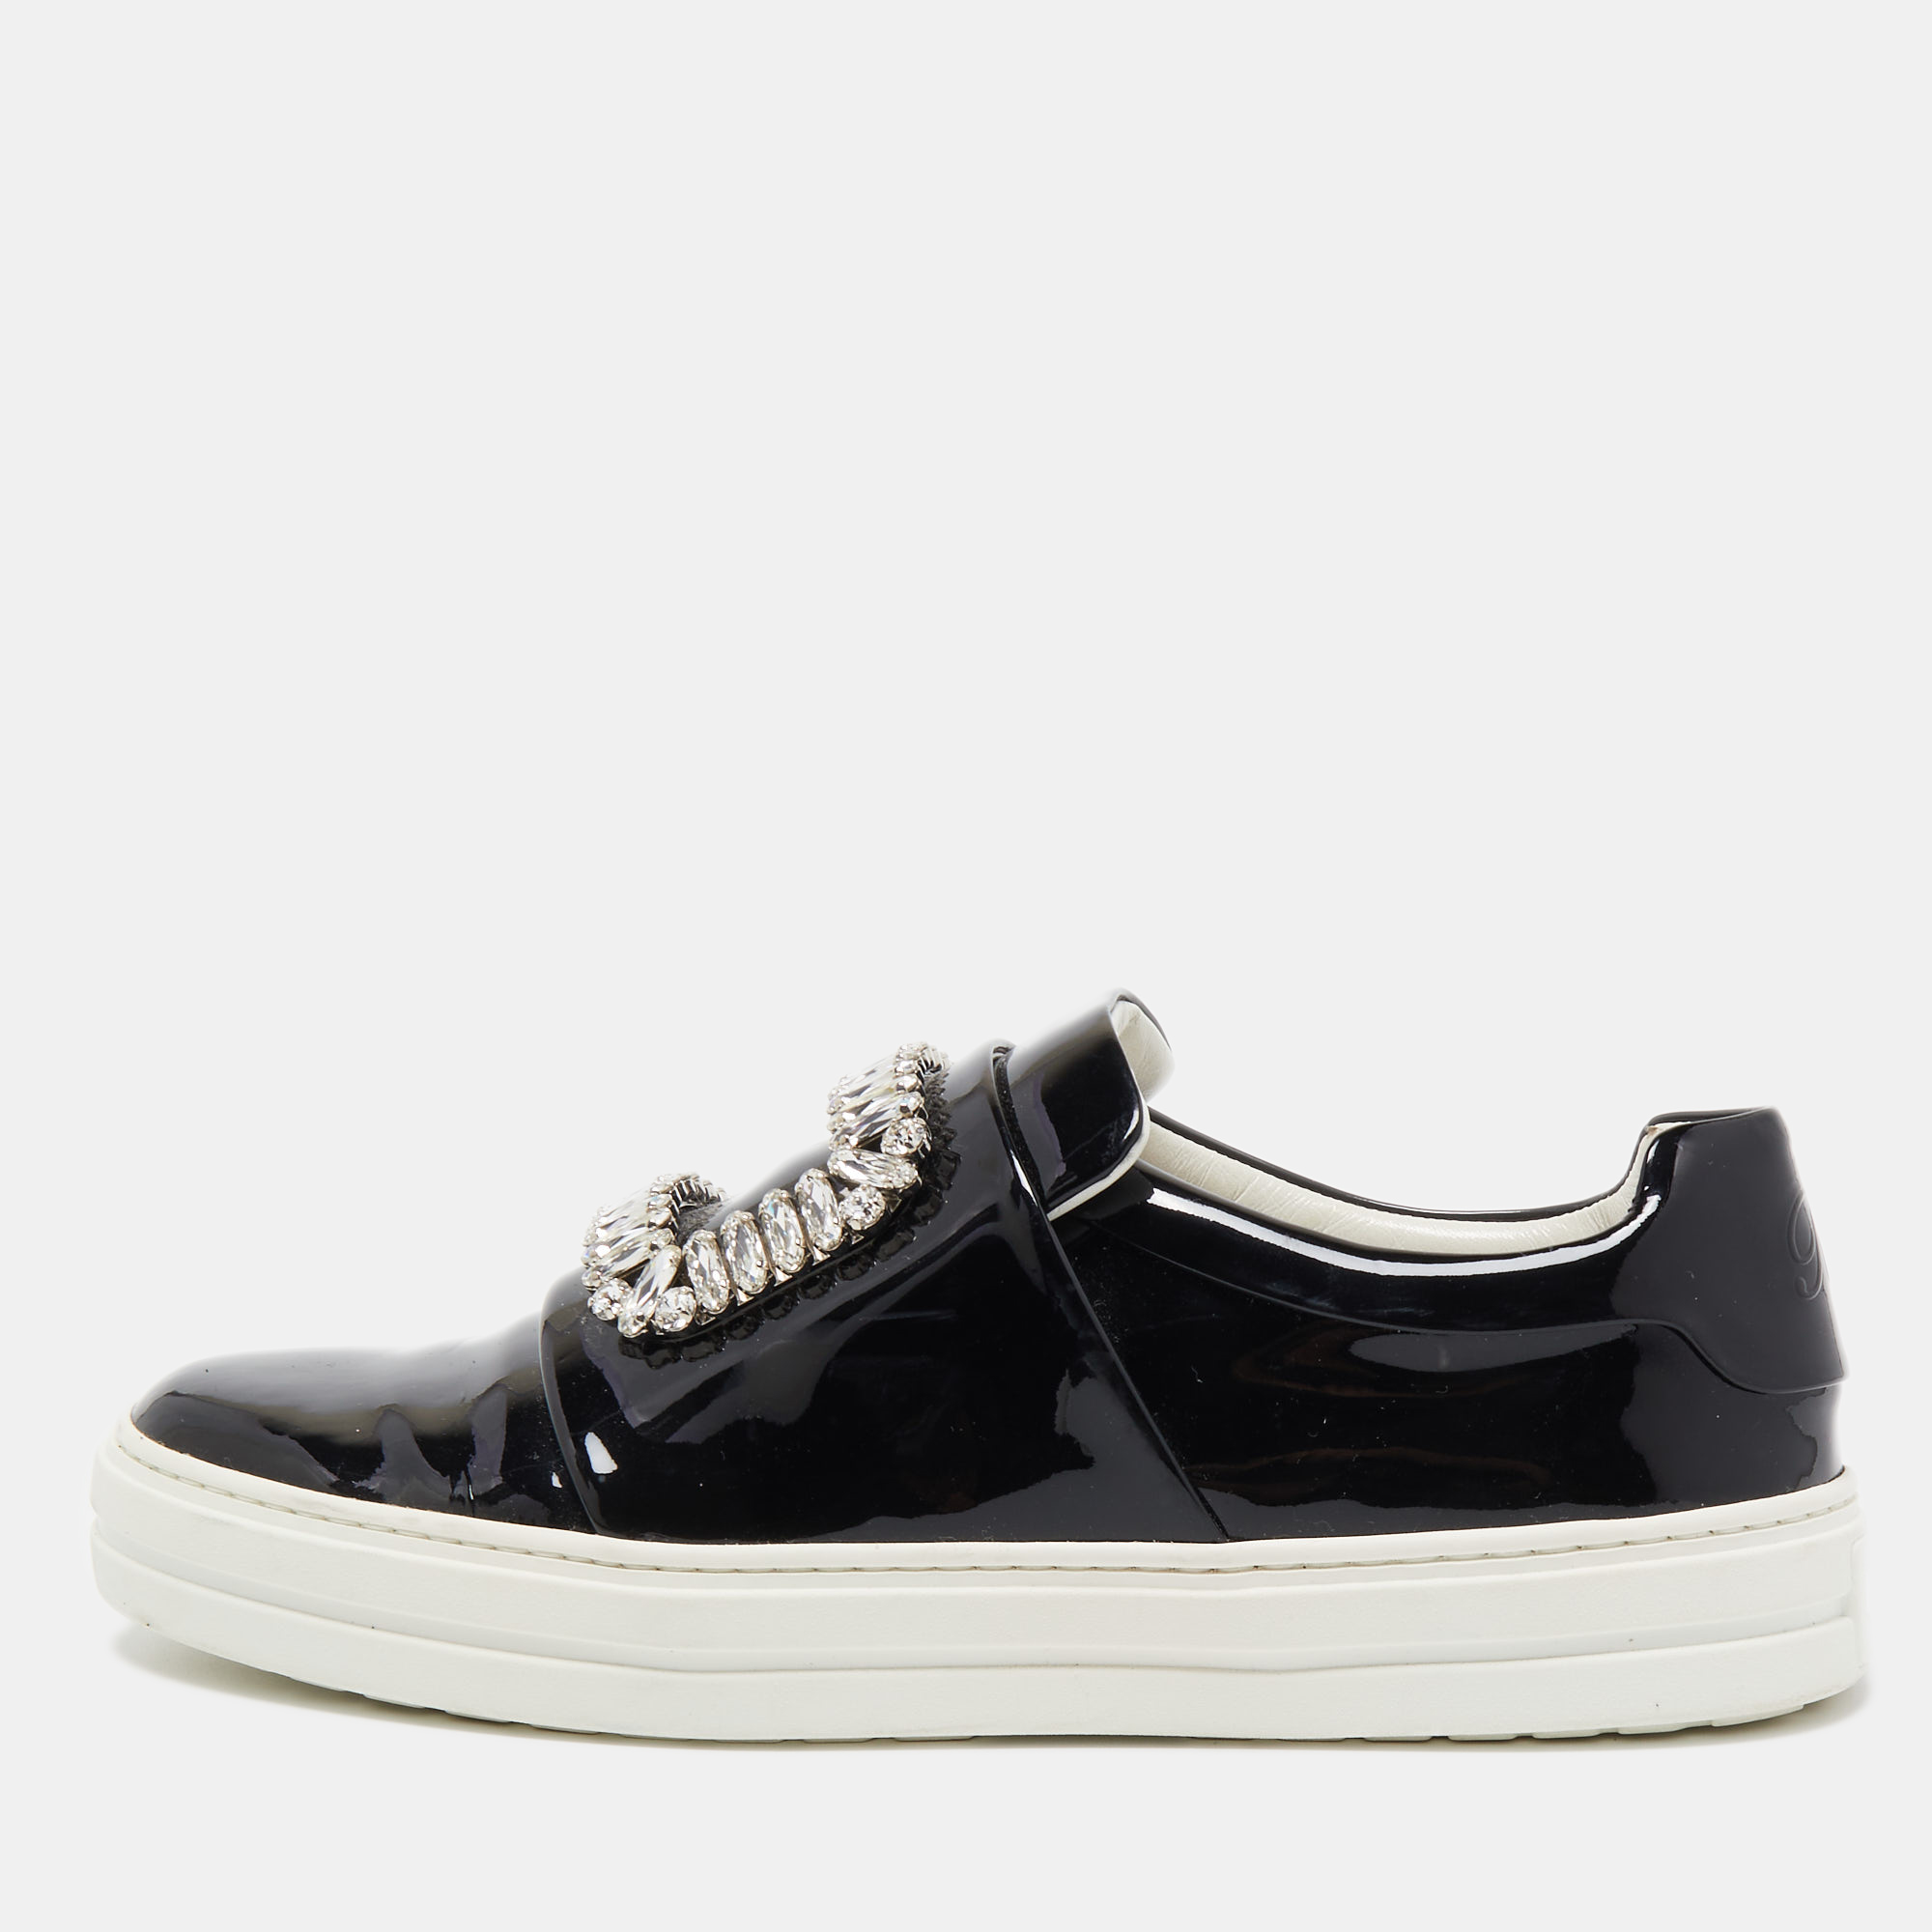 Roger vivier black patent leather sneaky viv crystal embellished slip on sneakers size 38